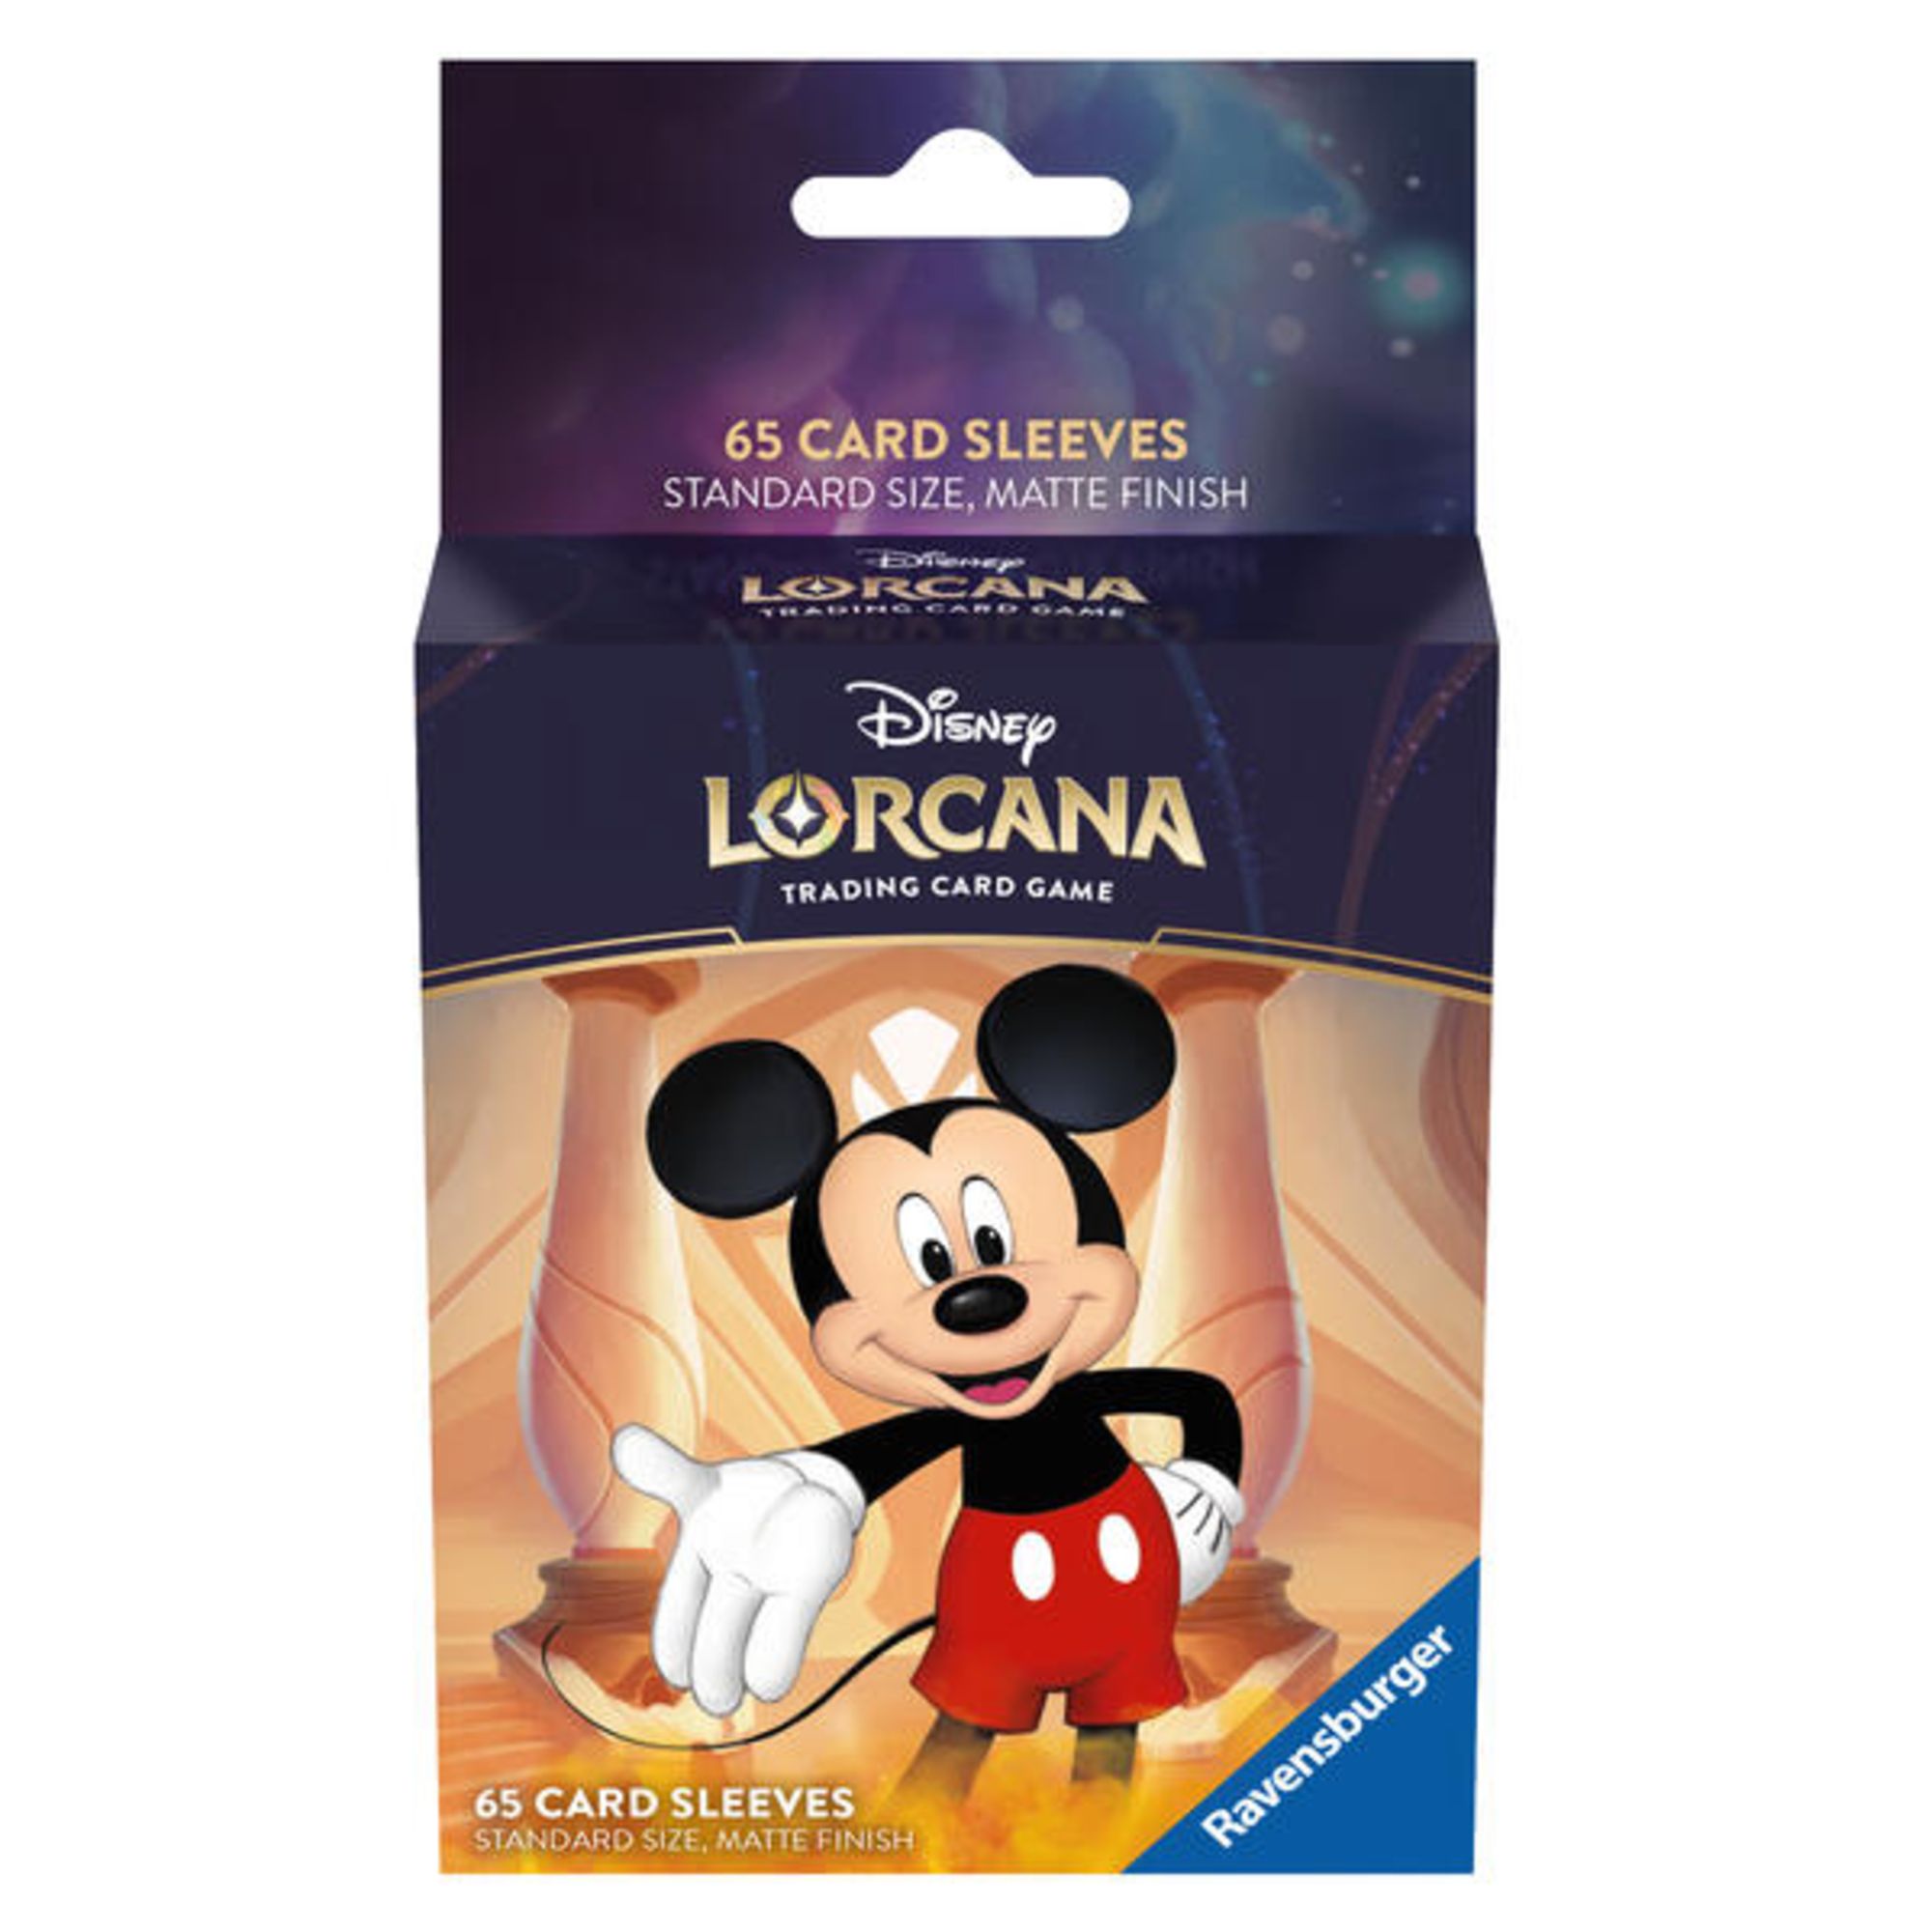 Disney Lorcana: Das Erste Kapitel - Geschenk-Set